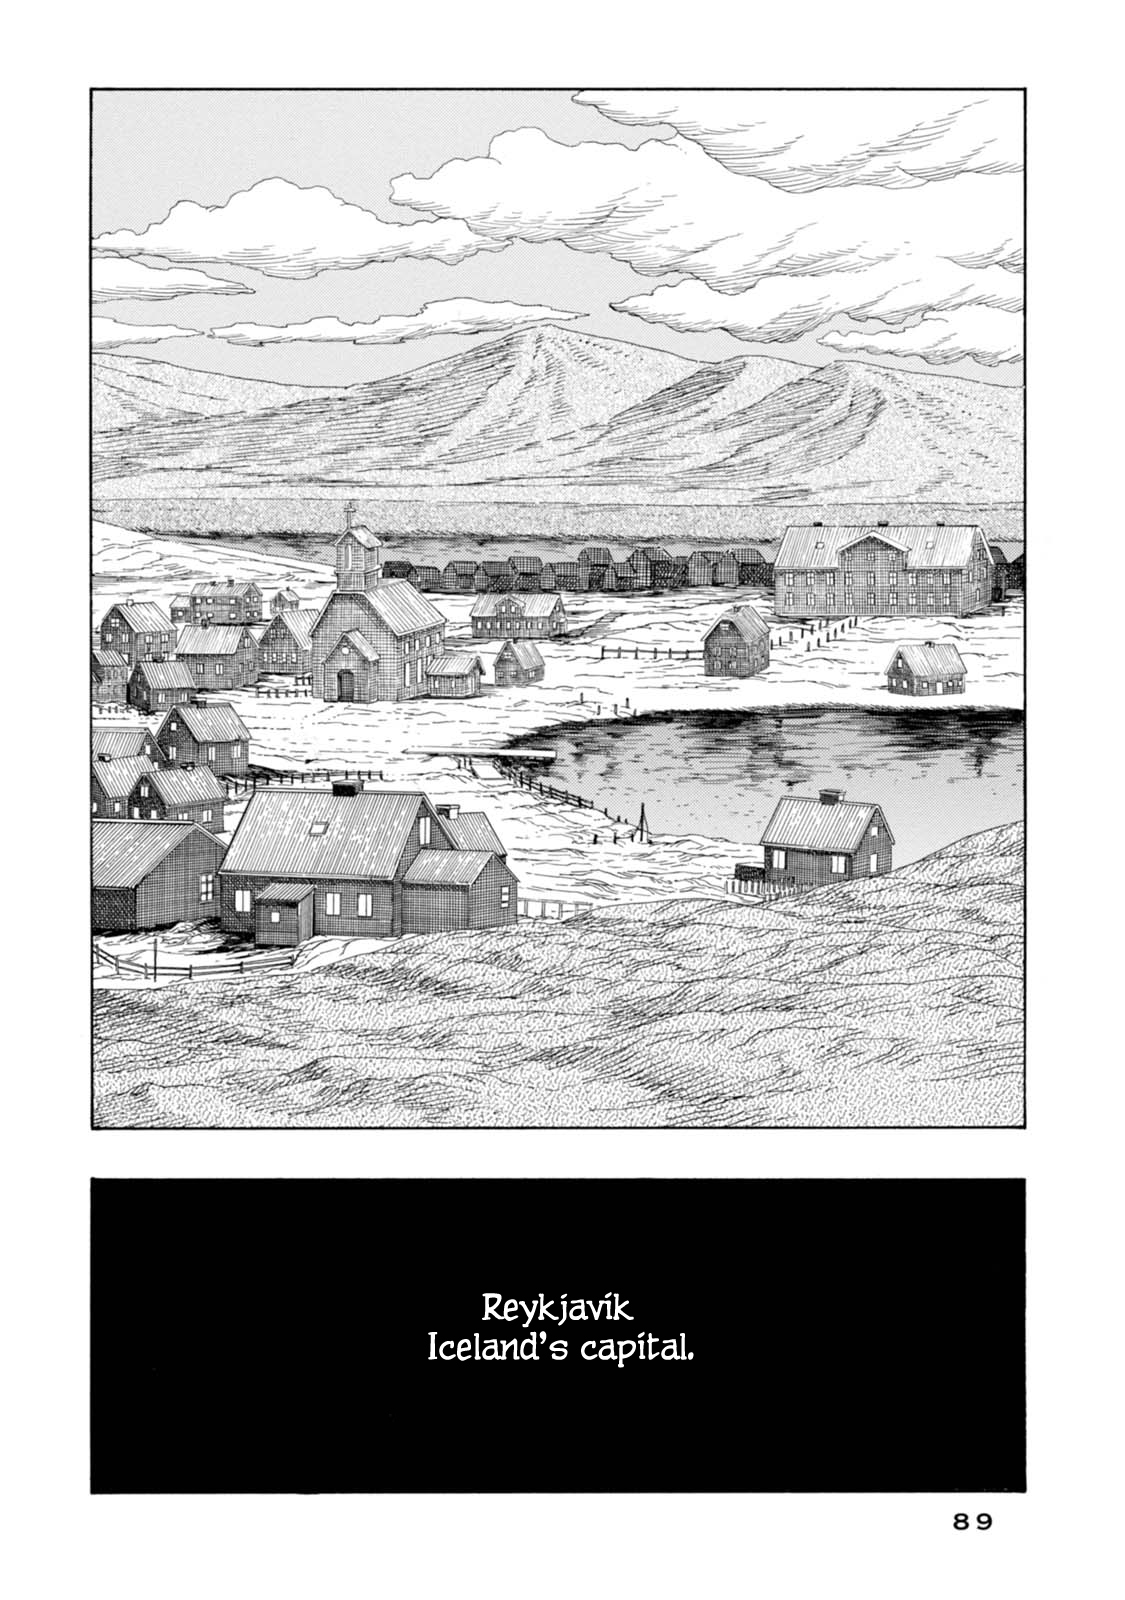 Chitei Ryokou Vol. 1 Ch. 3 Our Guide Hans